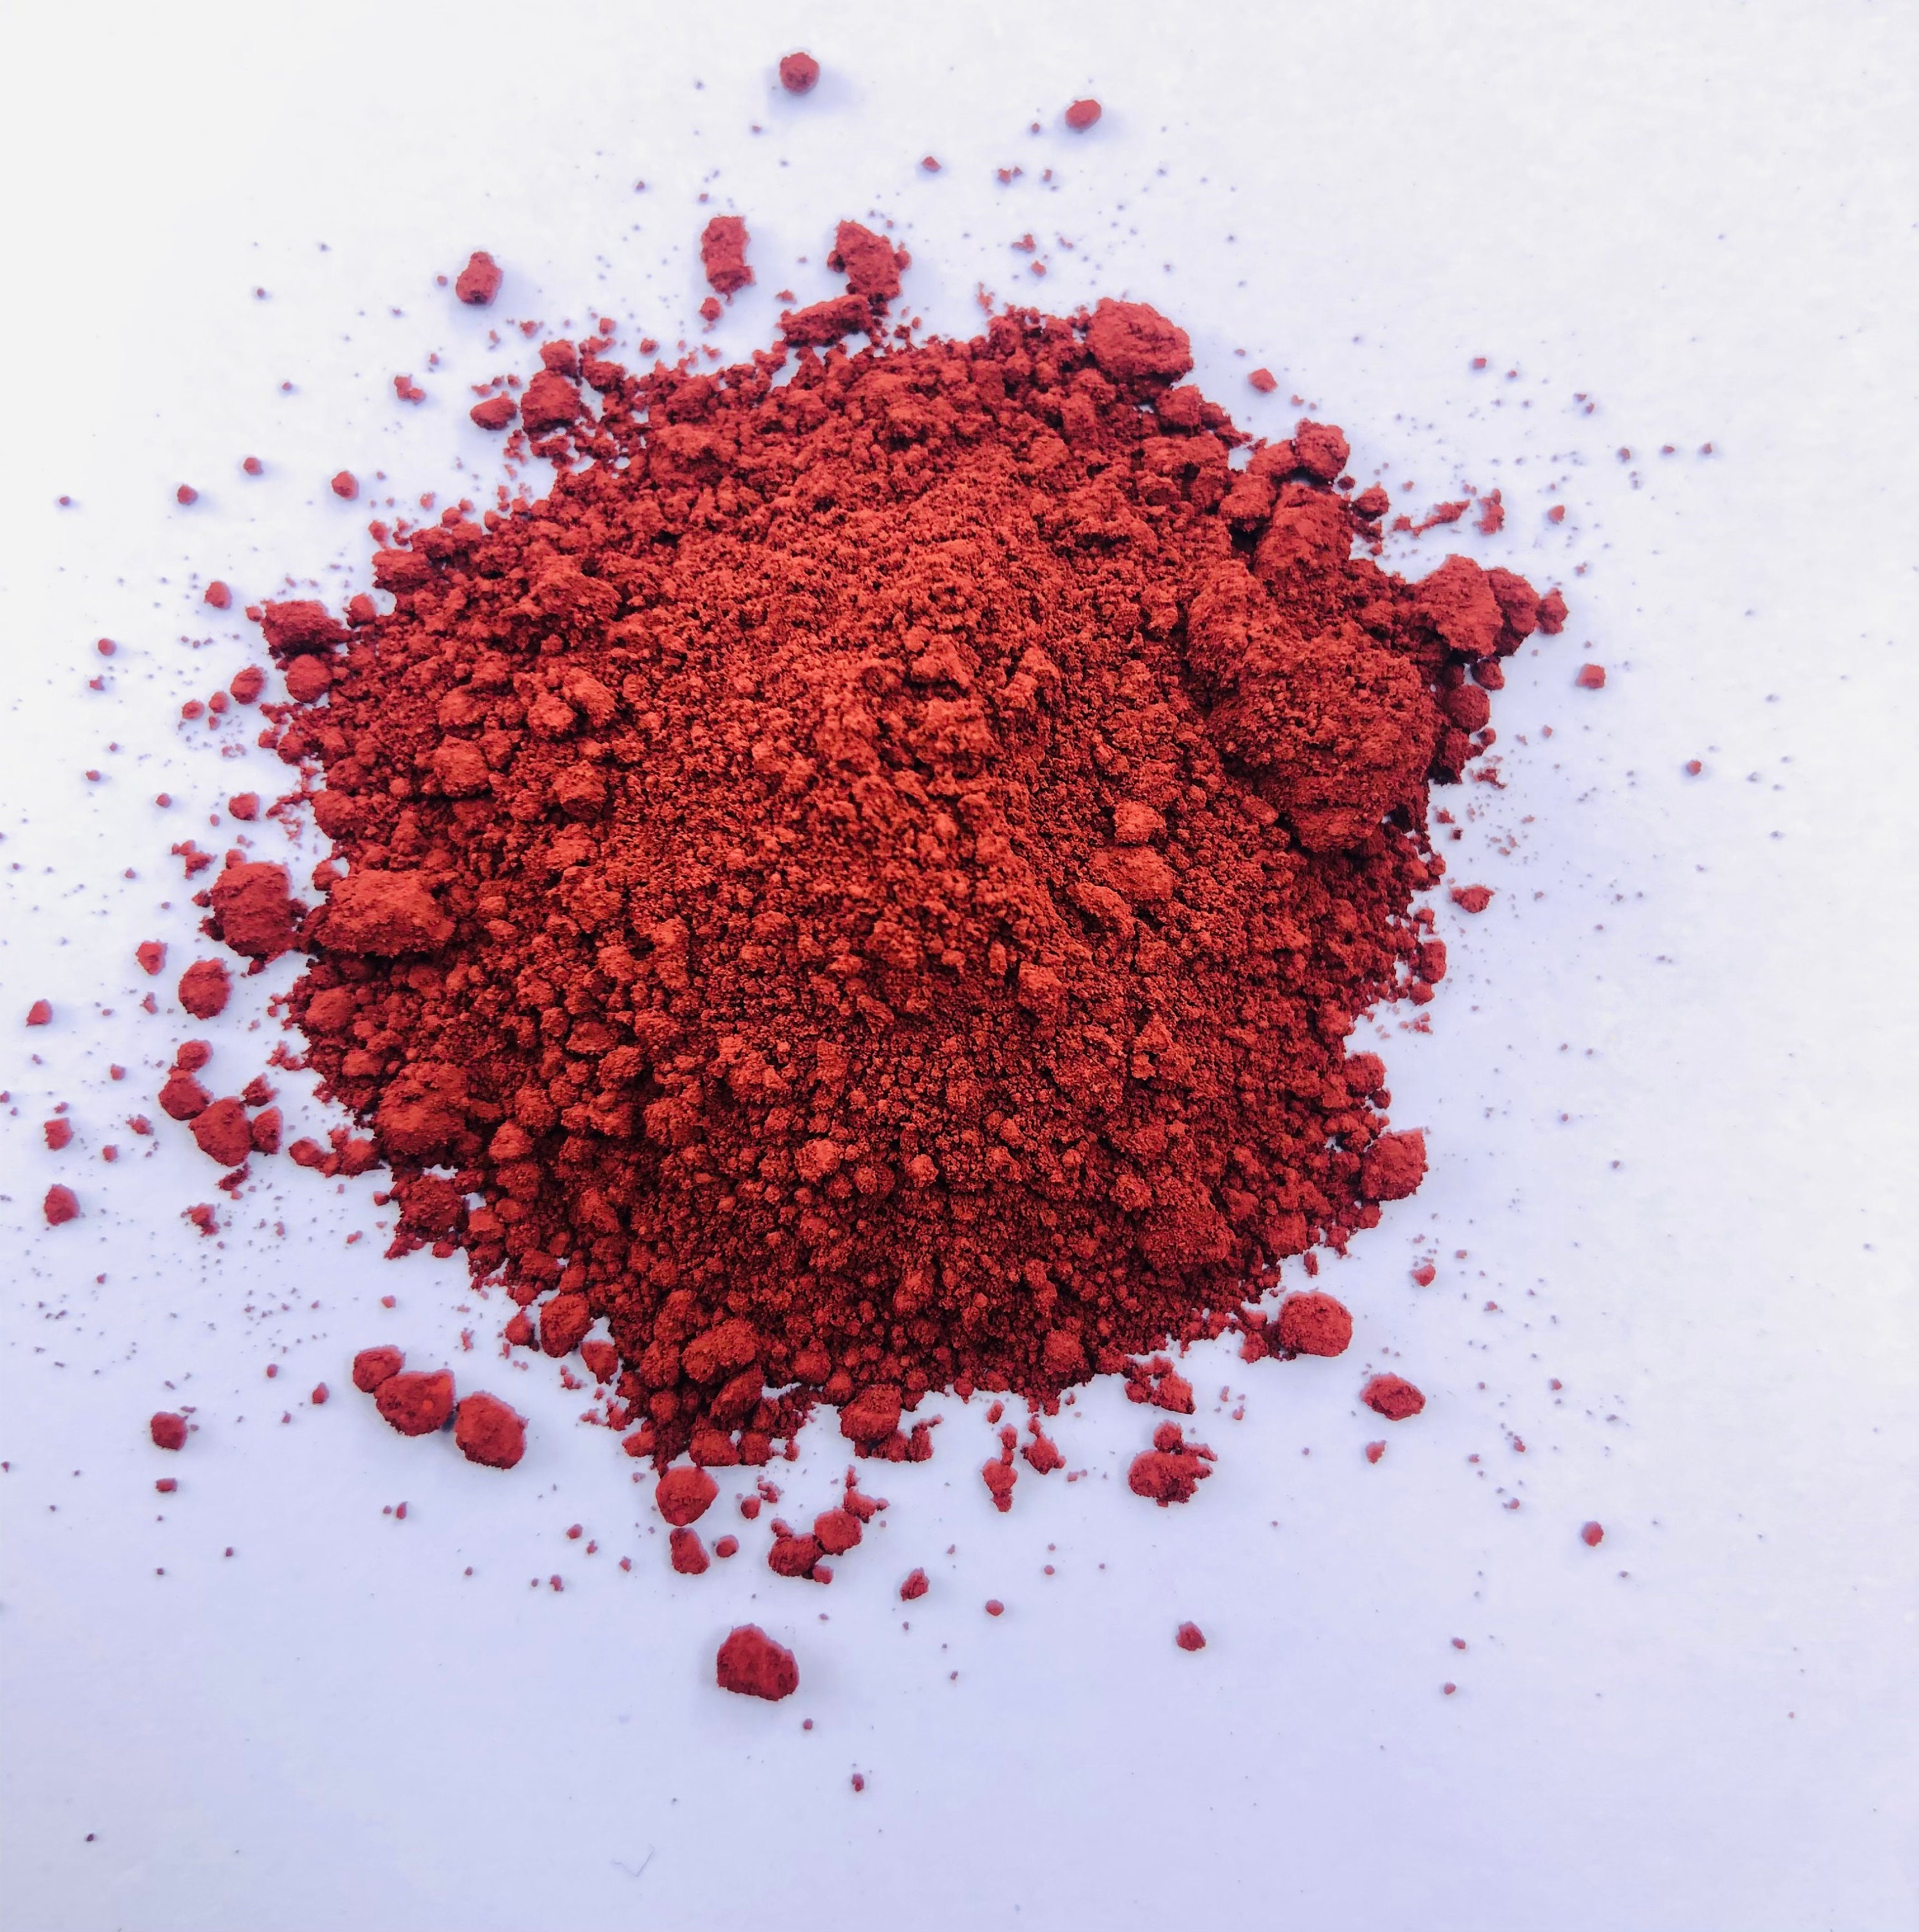 Concrete Pigment Jesmonite Pigment Cement Dye Natural Earths and Oxides UV  Resistant 